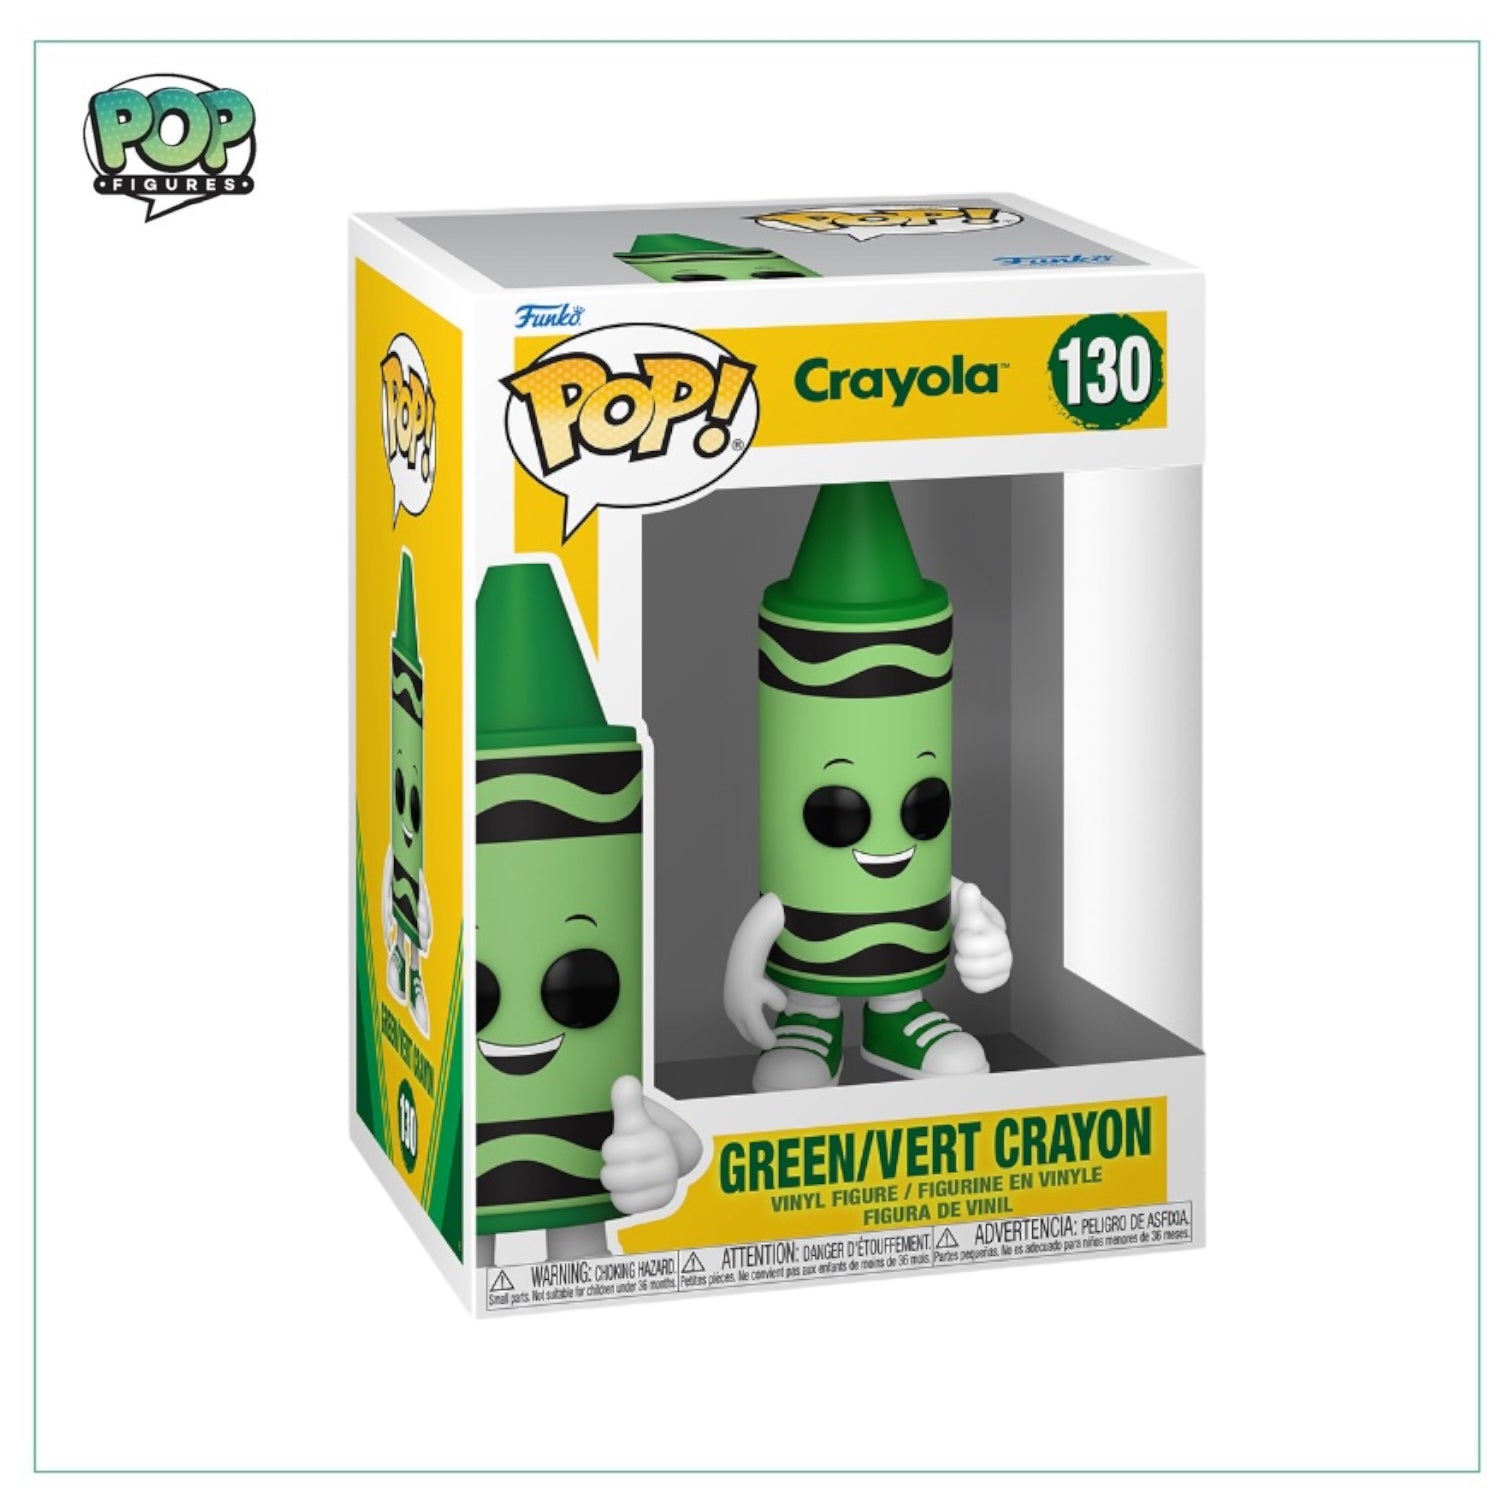 Green/Vert Crayon #130 Funko Pop! - Crayola